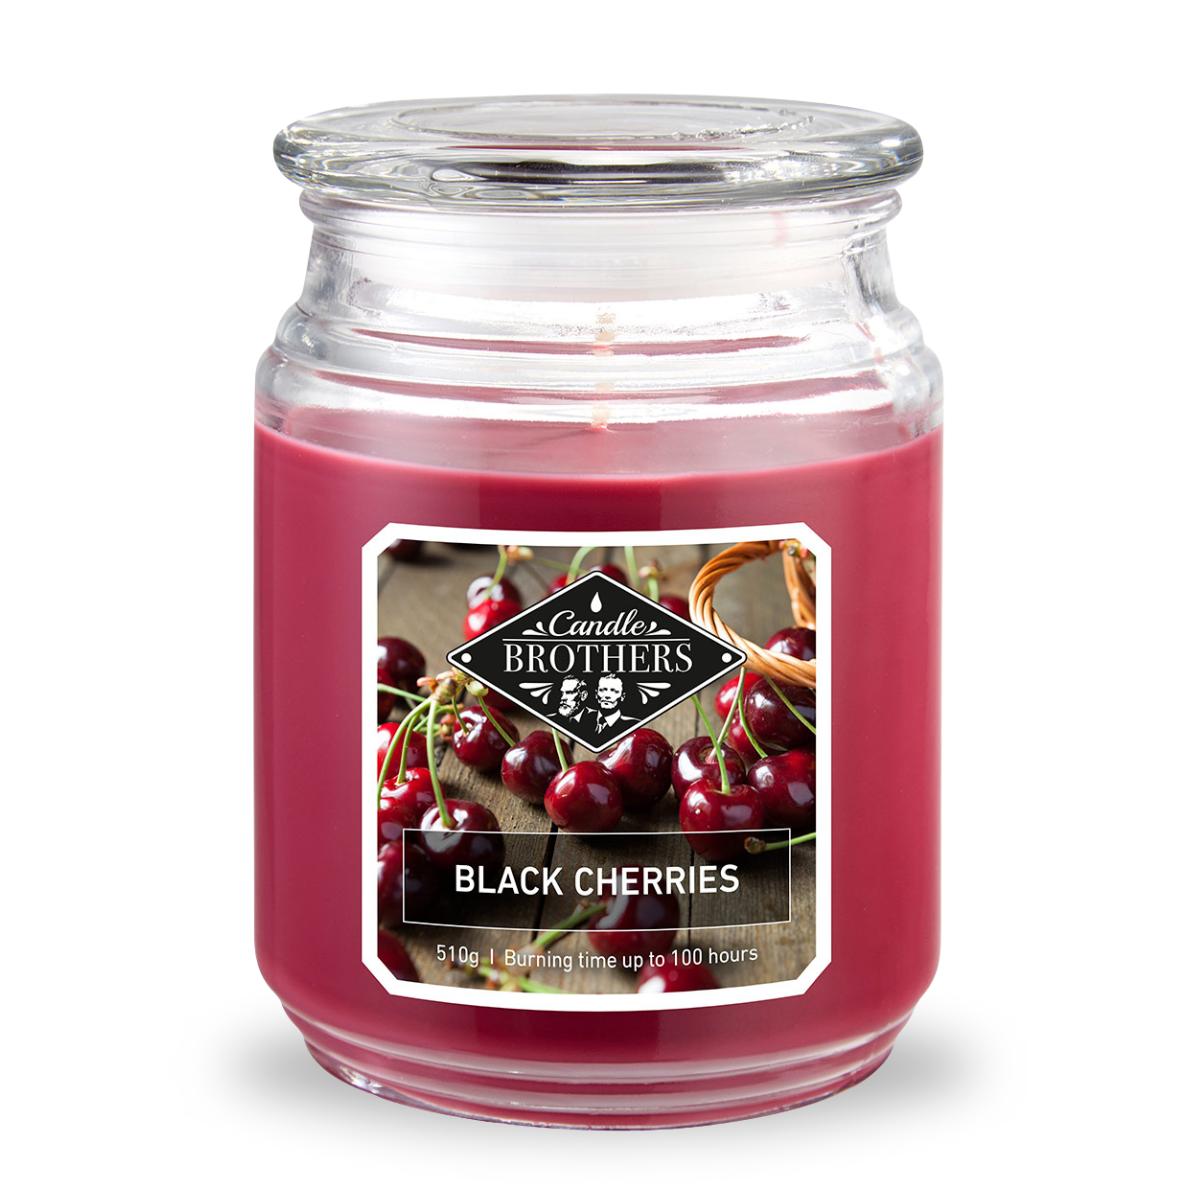 Black Cherries - Duftkerze 510g von Candle Brothers